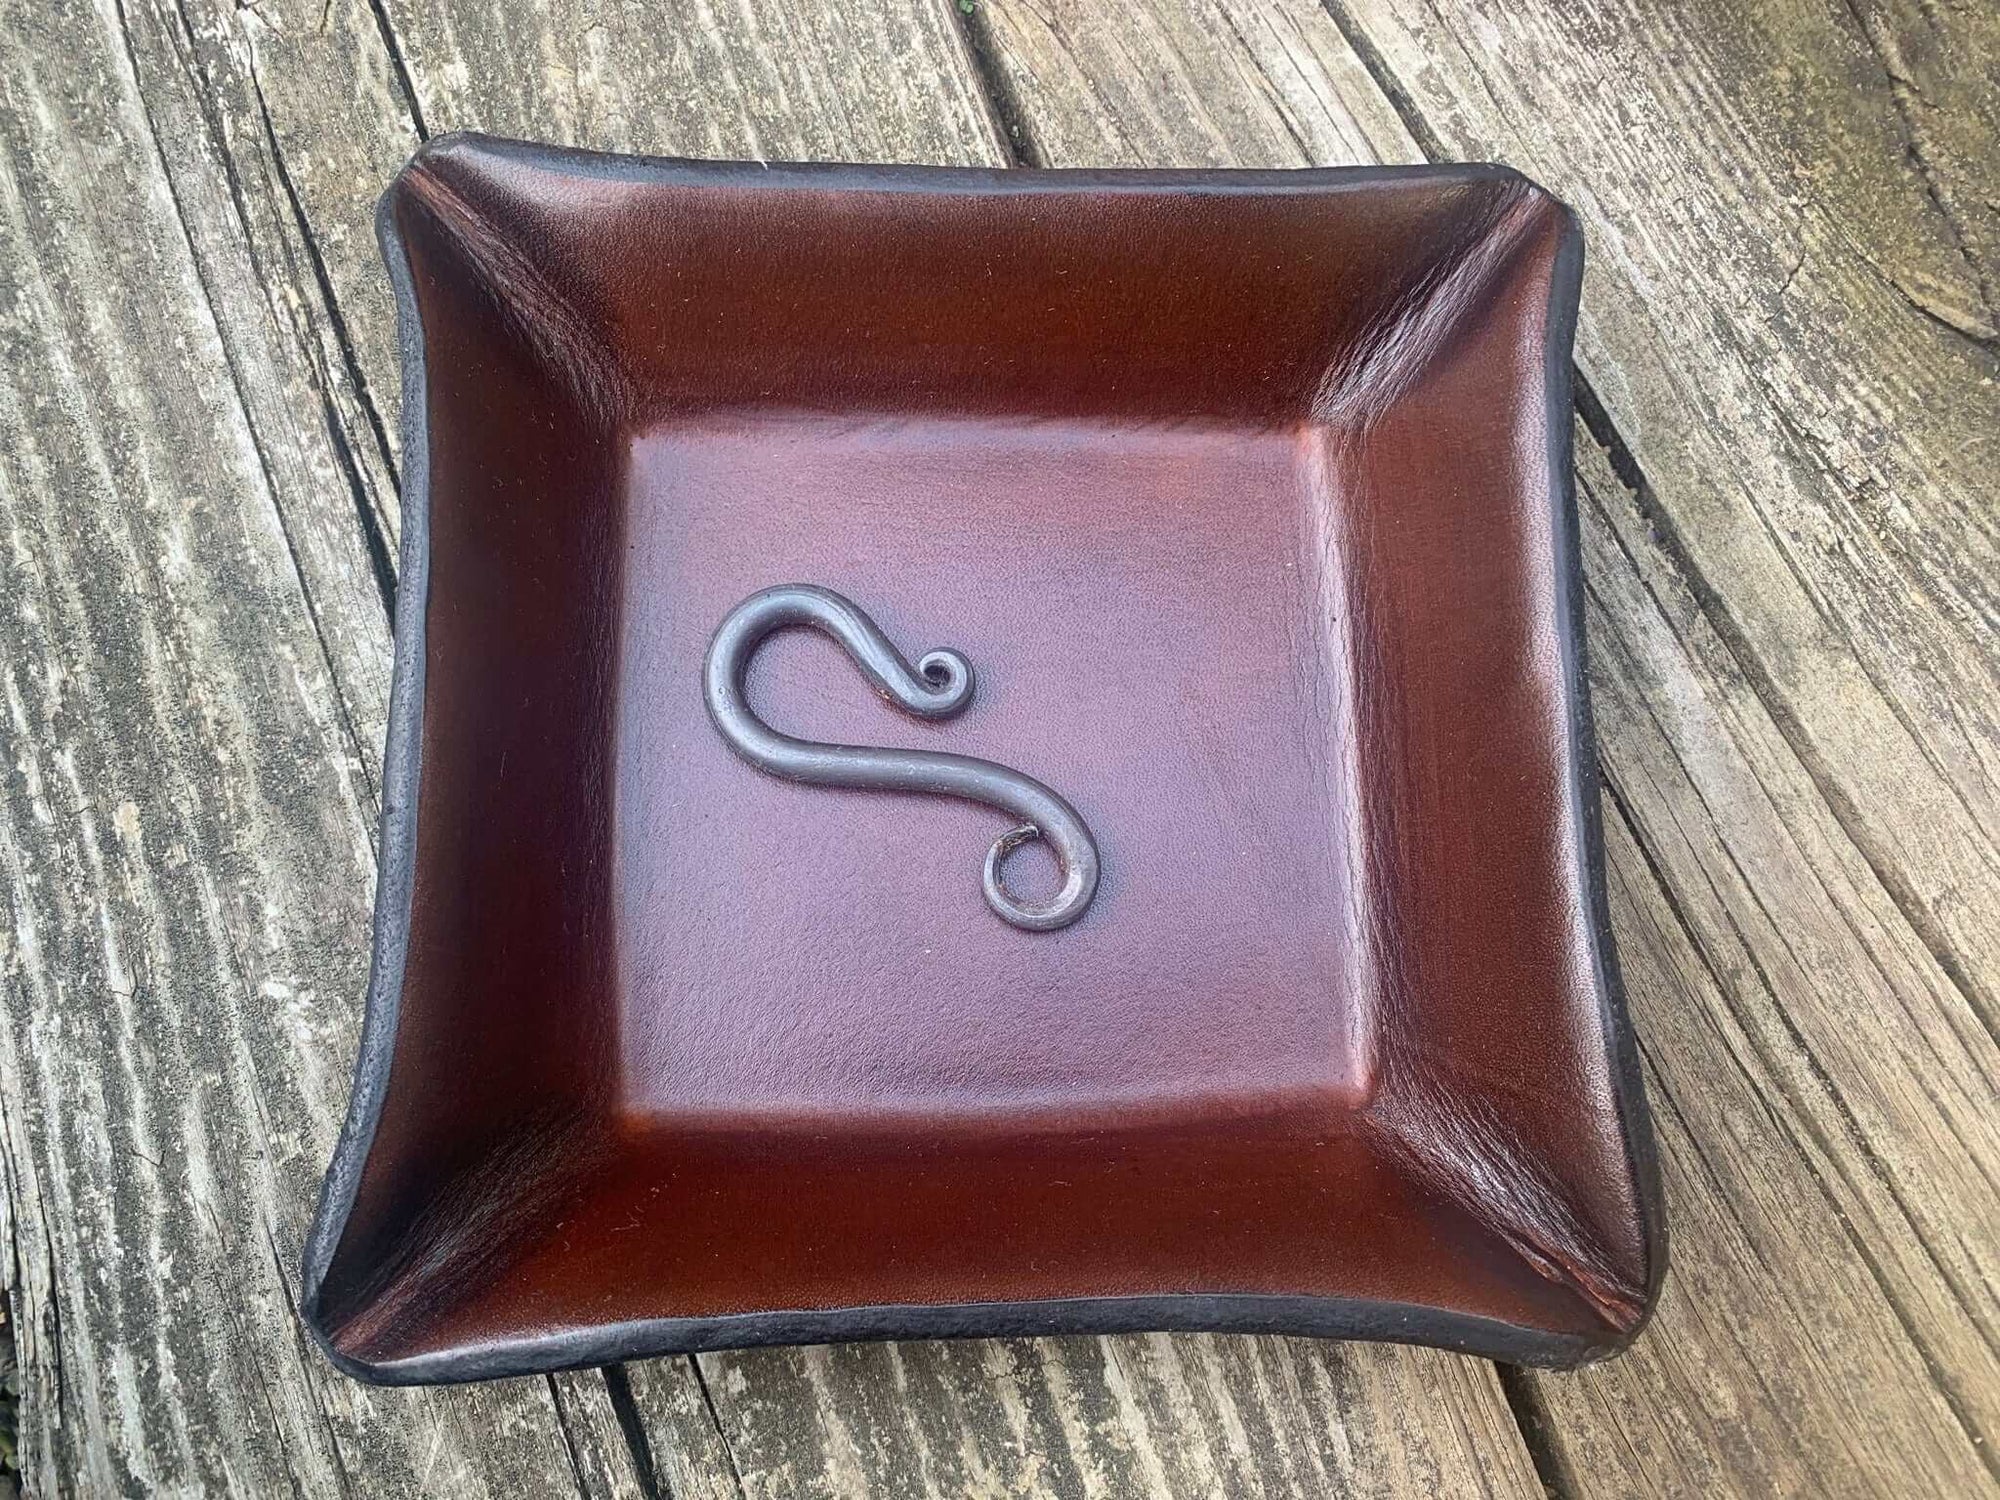 Leather Valet Tray and Iron Key Ring Gift Set.